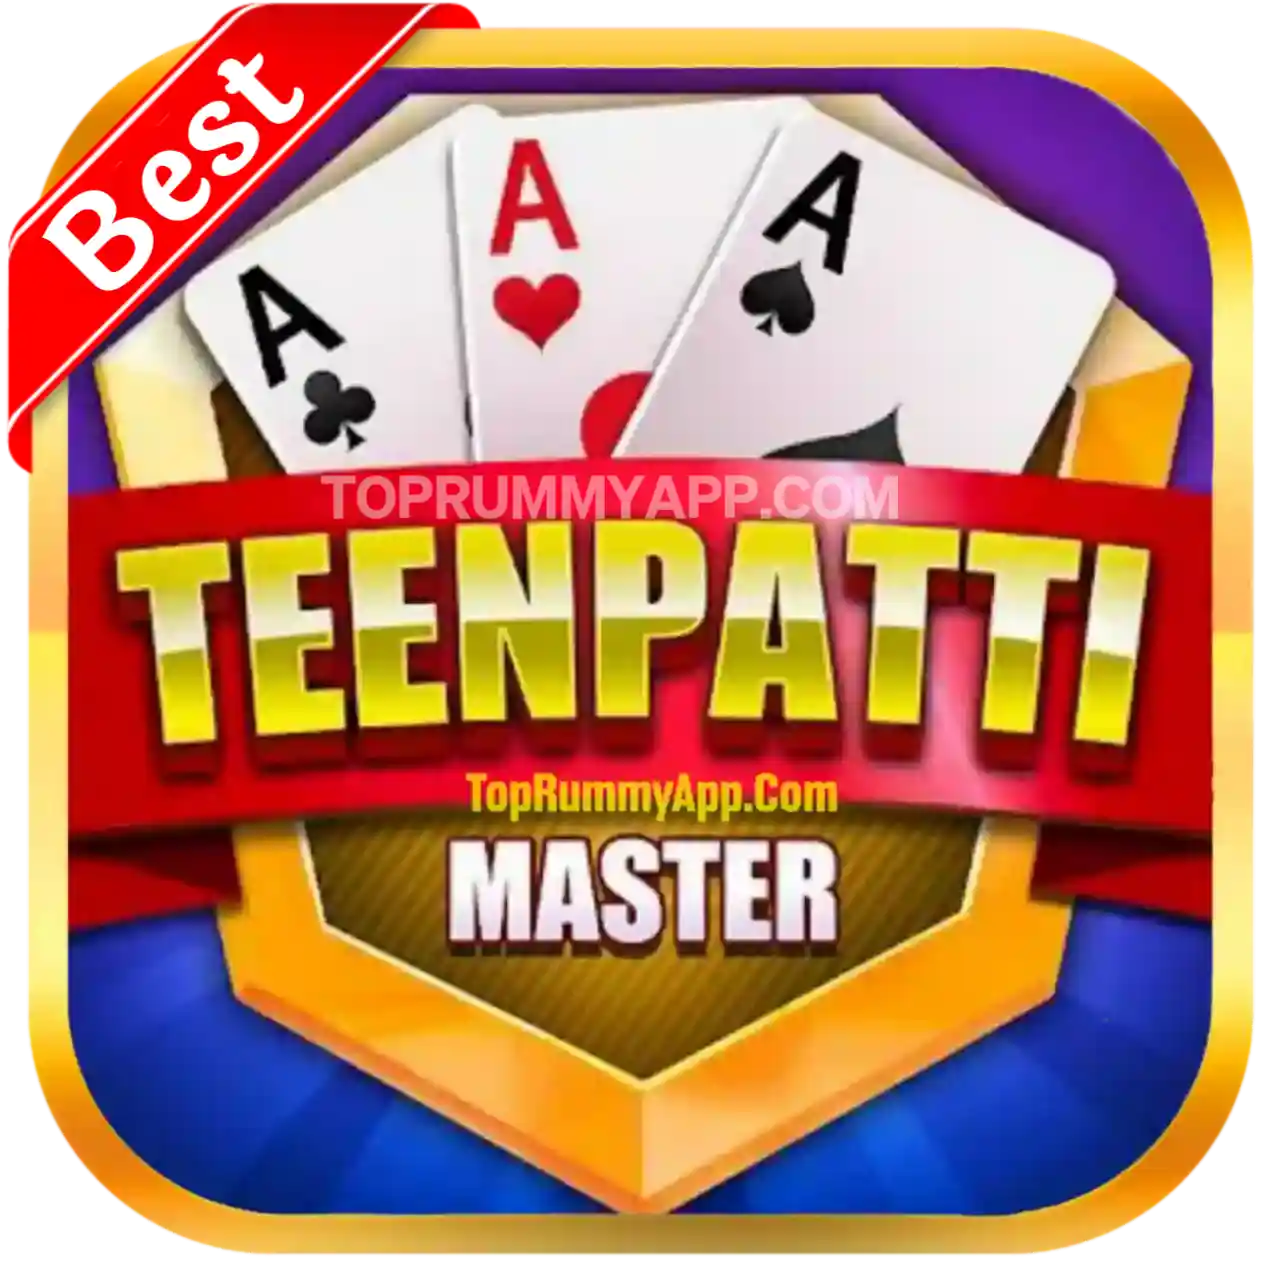 Teen Patti Master Apk Download - Teen Patti Royal Apk Download